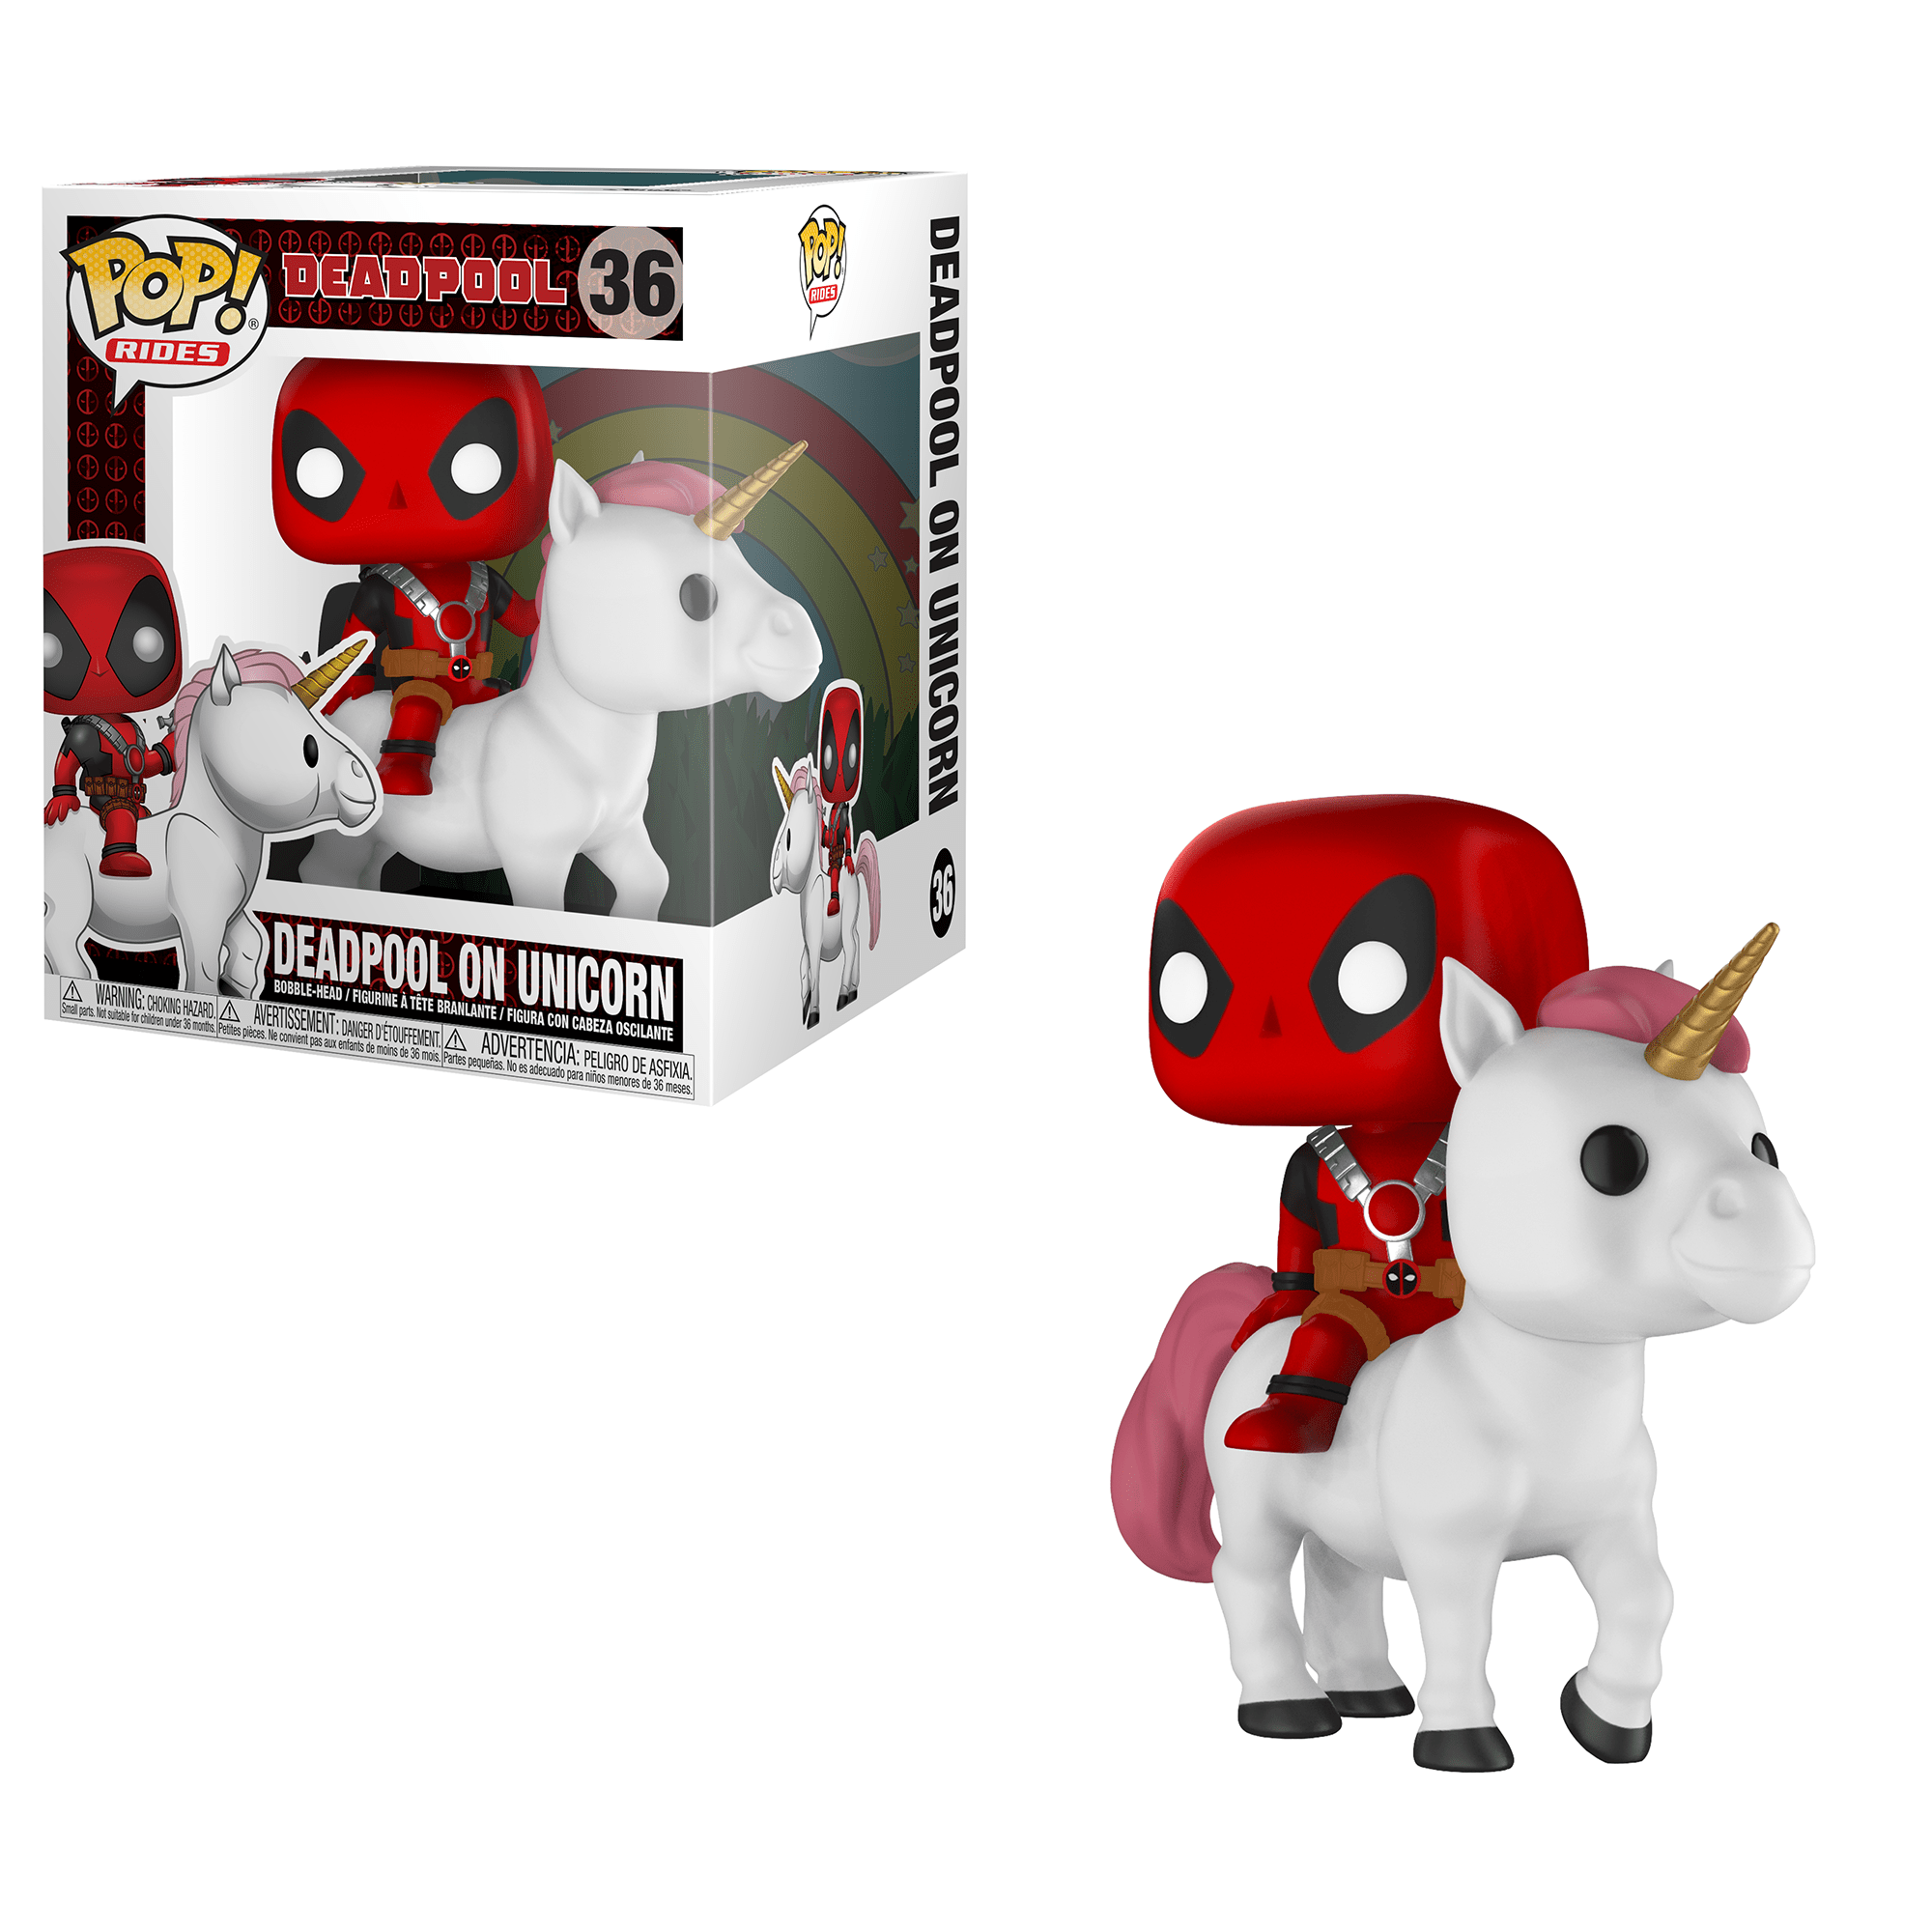 Deadpool (Riding a Unicorn)